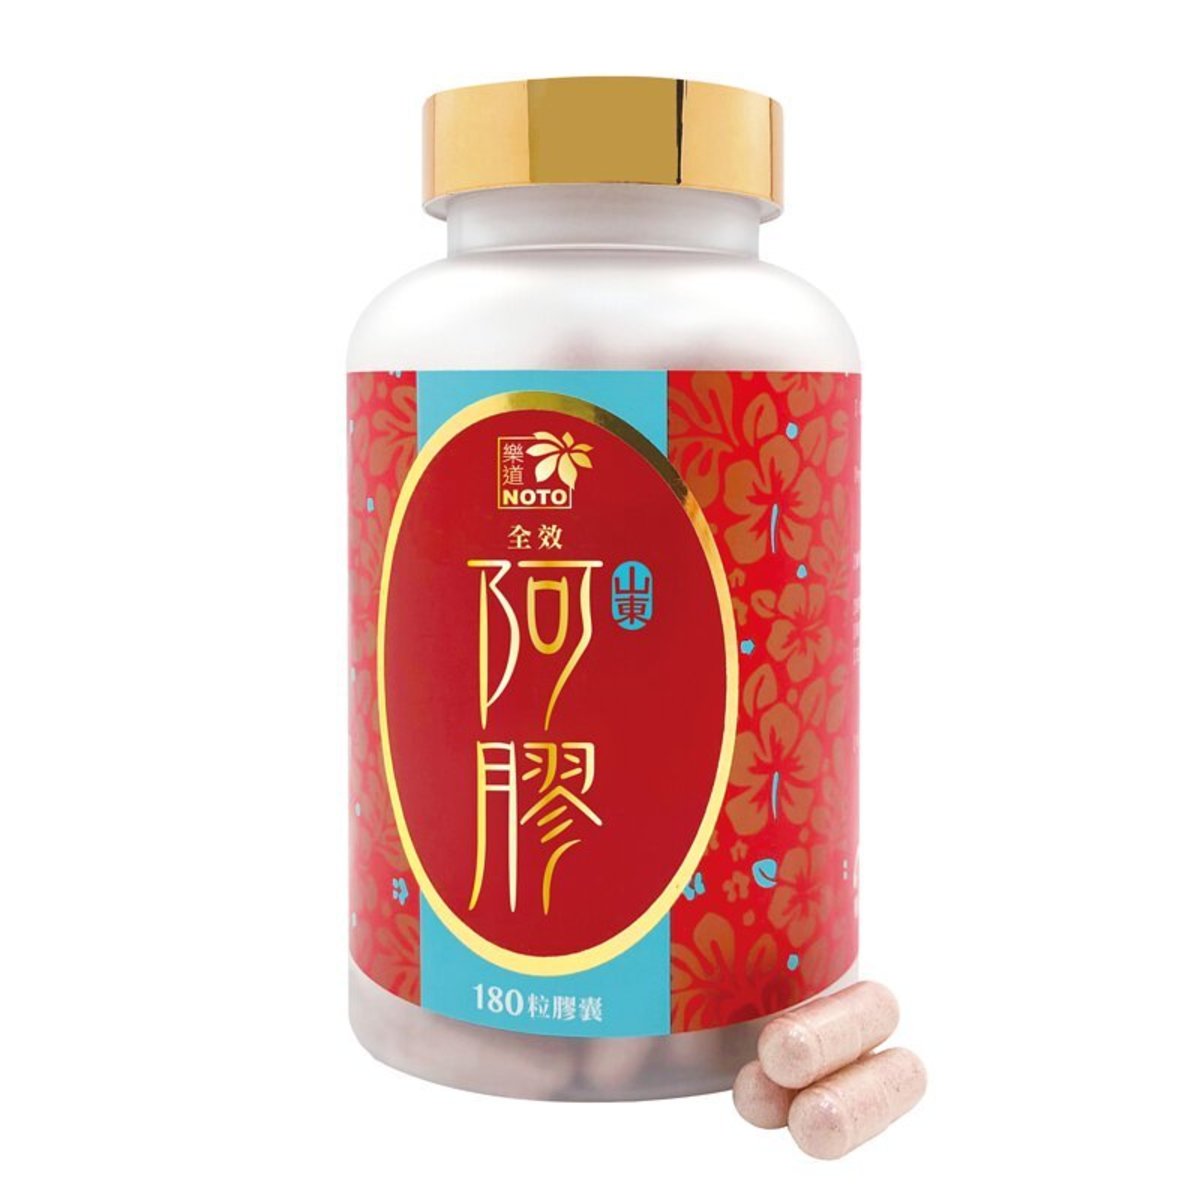 Ledao - Ledao Full Effect Shandong Ejiao (180 capsules) 